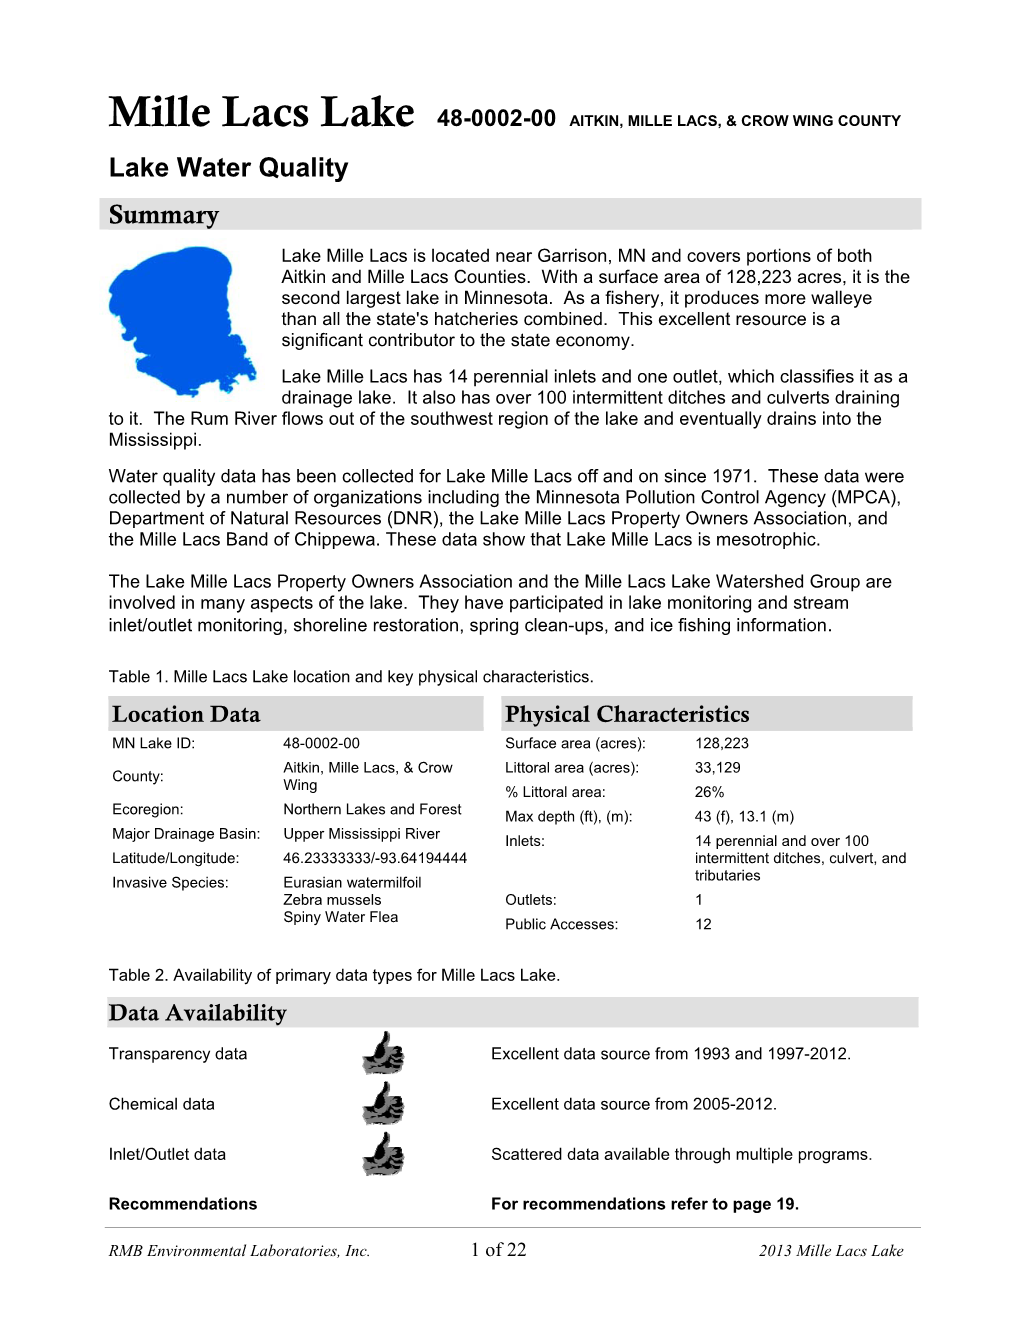 Lake Water Quality Summary